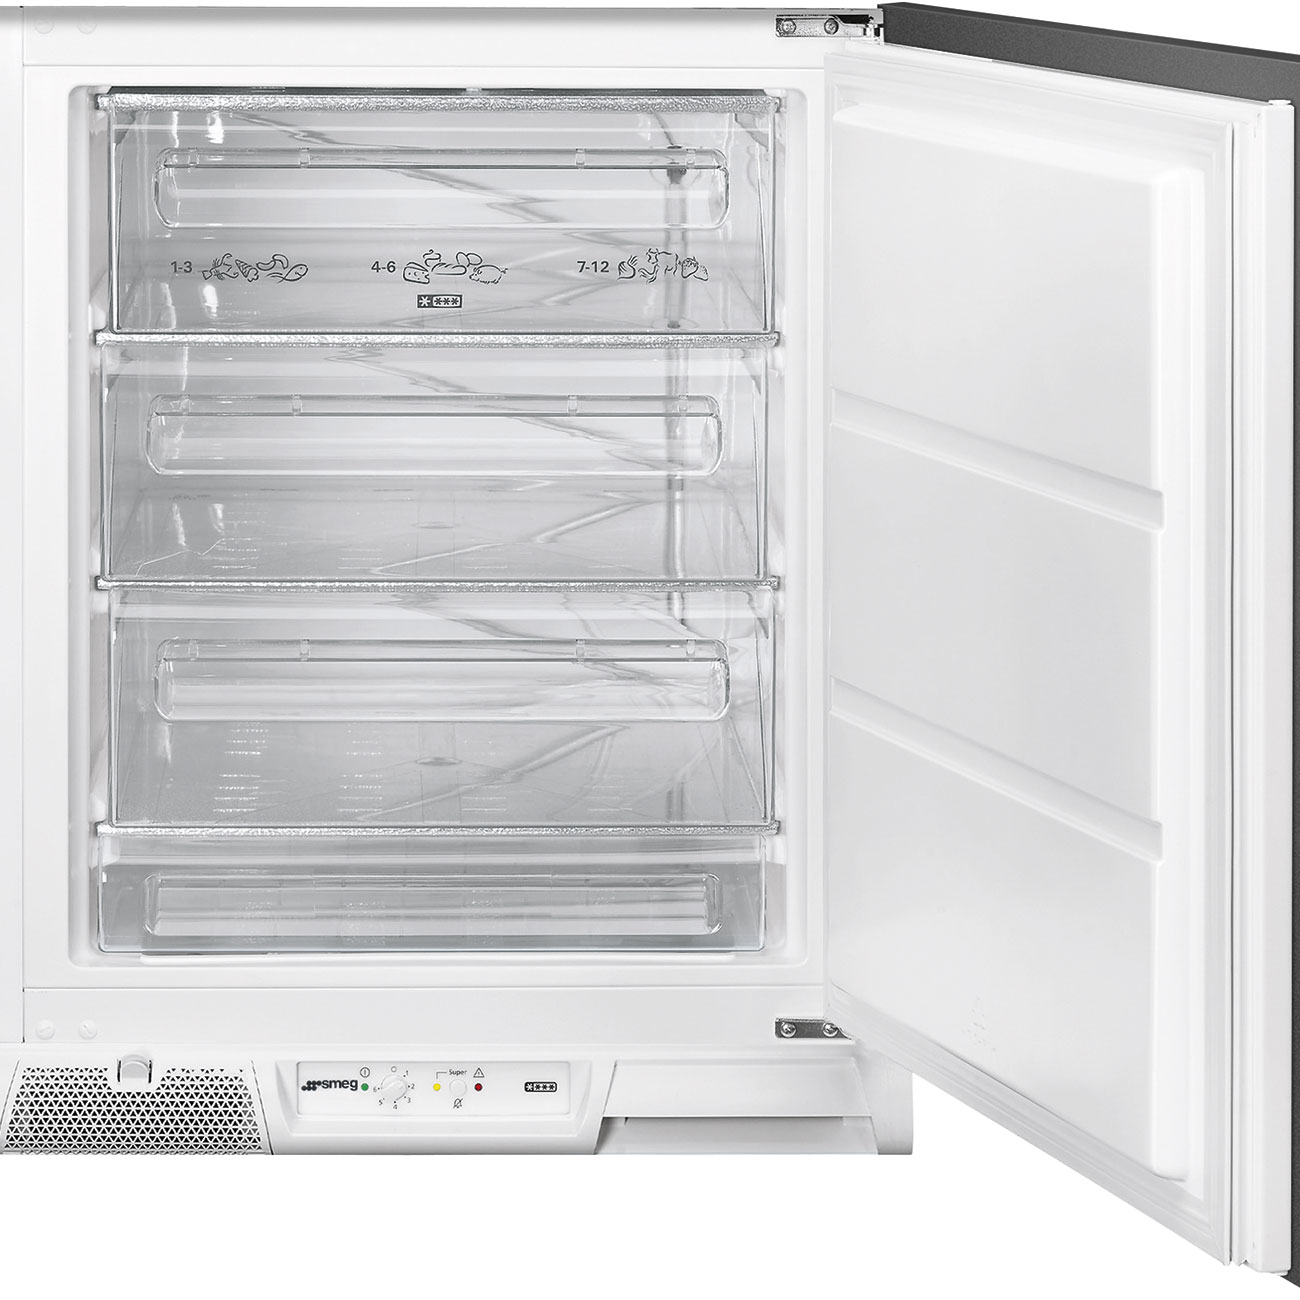 Under counter Built-in freezer- Smeg_1